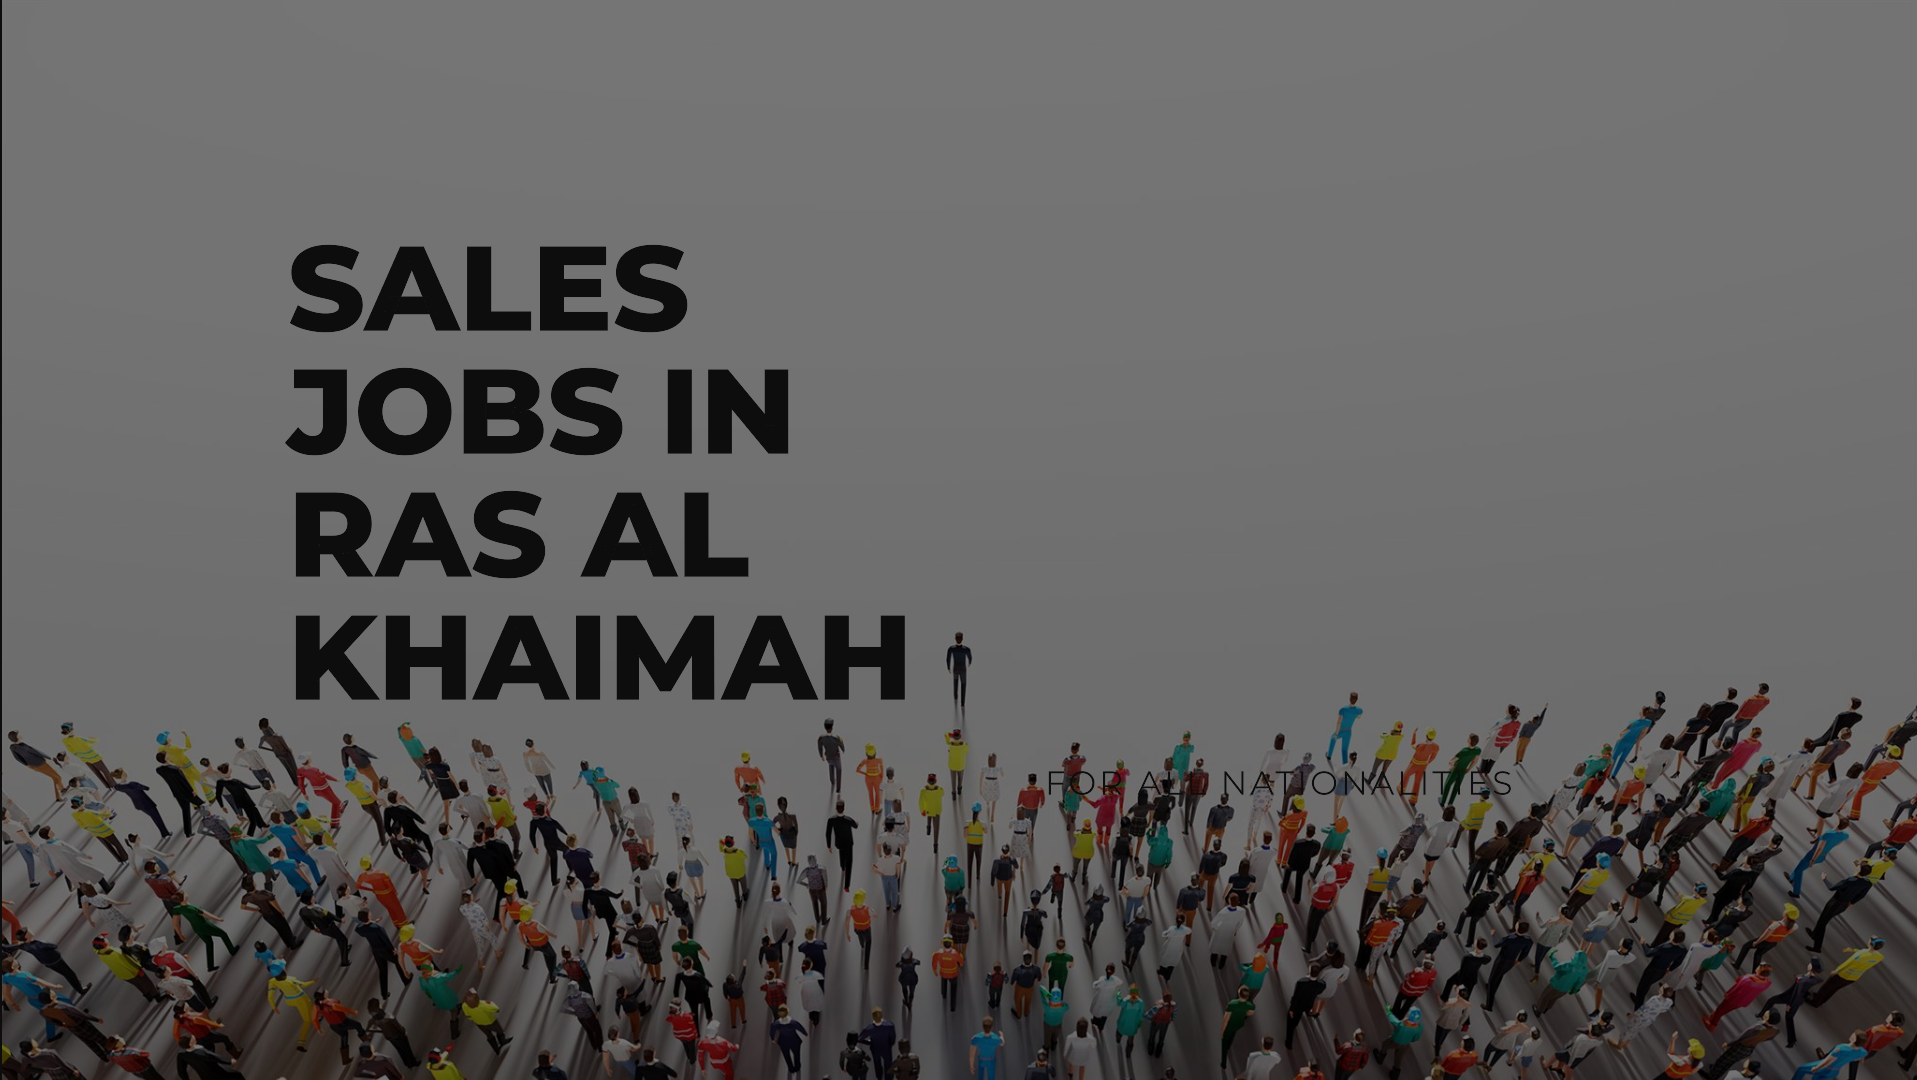 sales jobs in ras al khaimah for all nationalities